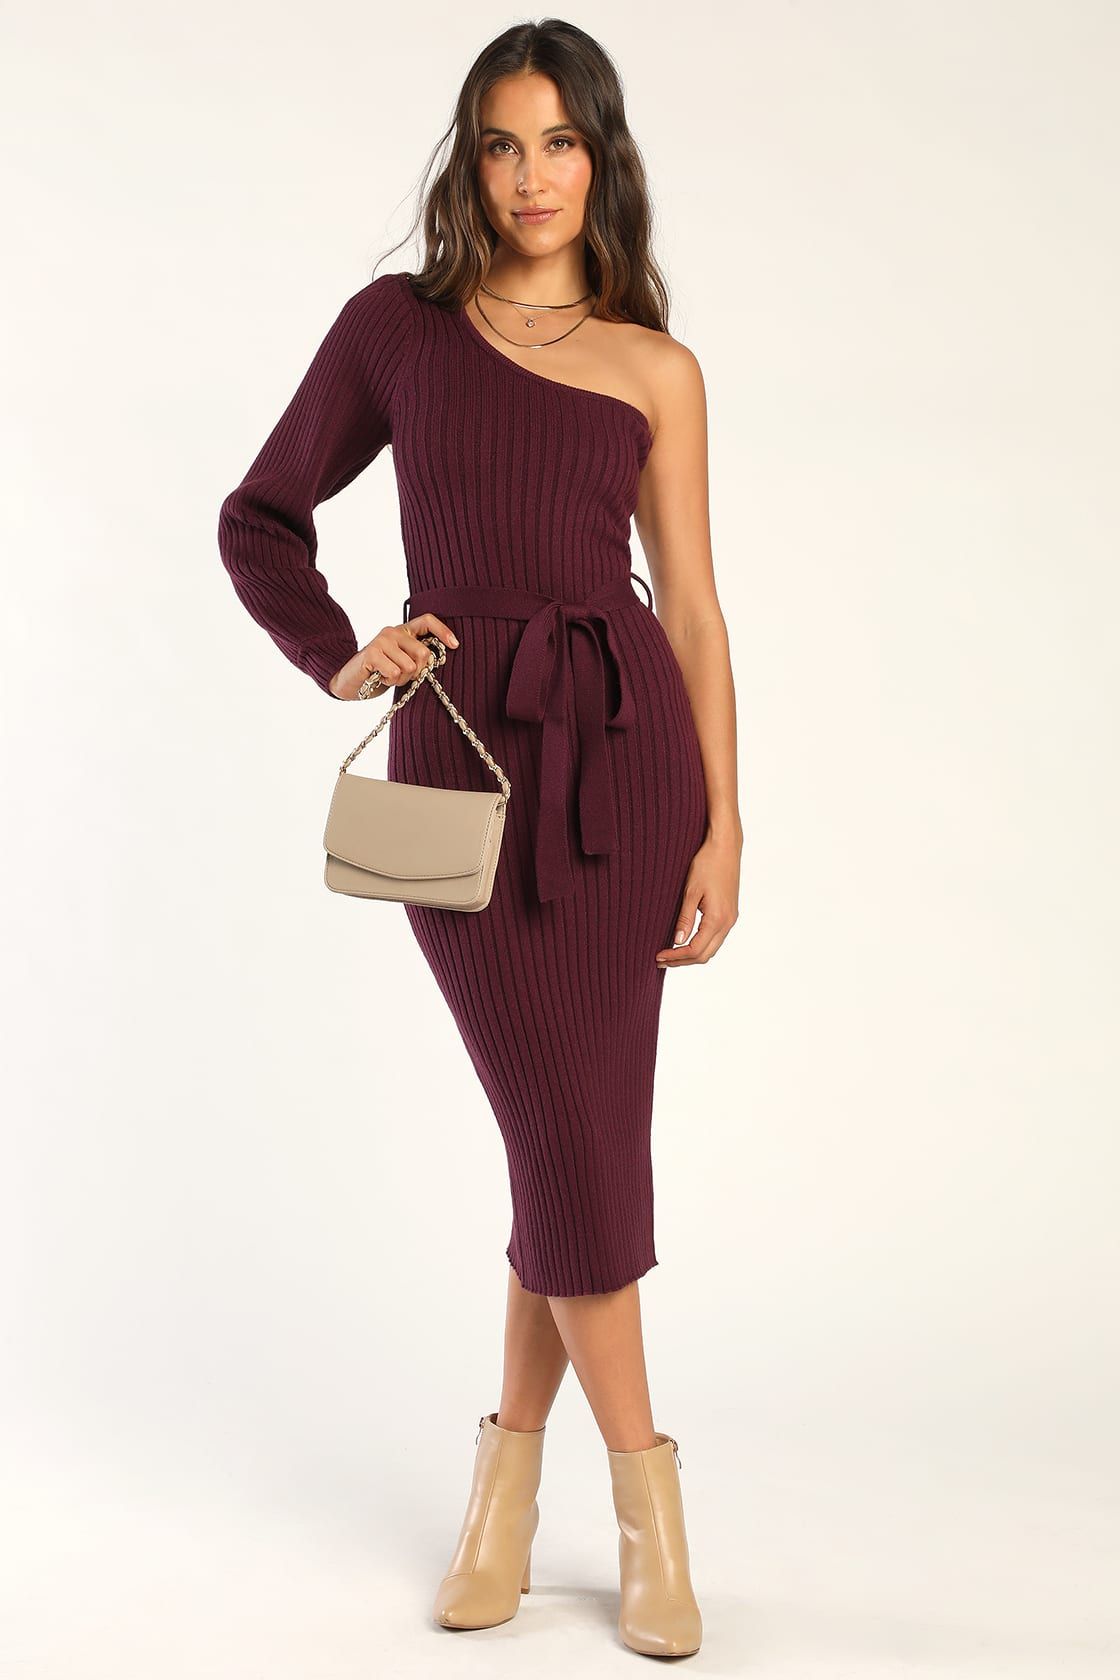 Abundant Allure Plum Purple One-Shoulder Sweater Dress | Lulus (US)